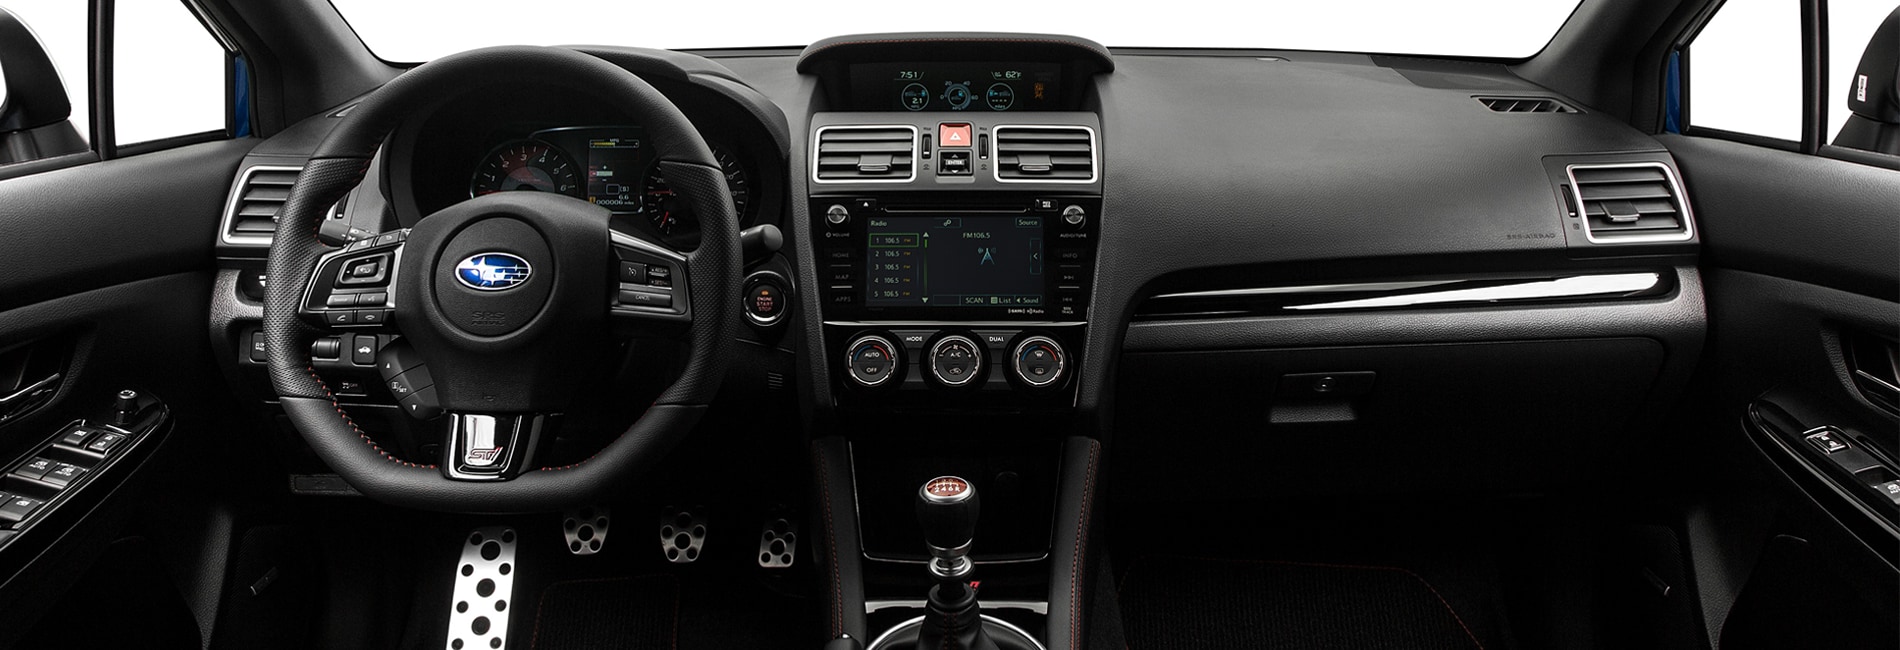 Subaru WRX Interior Vehicle Features